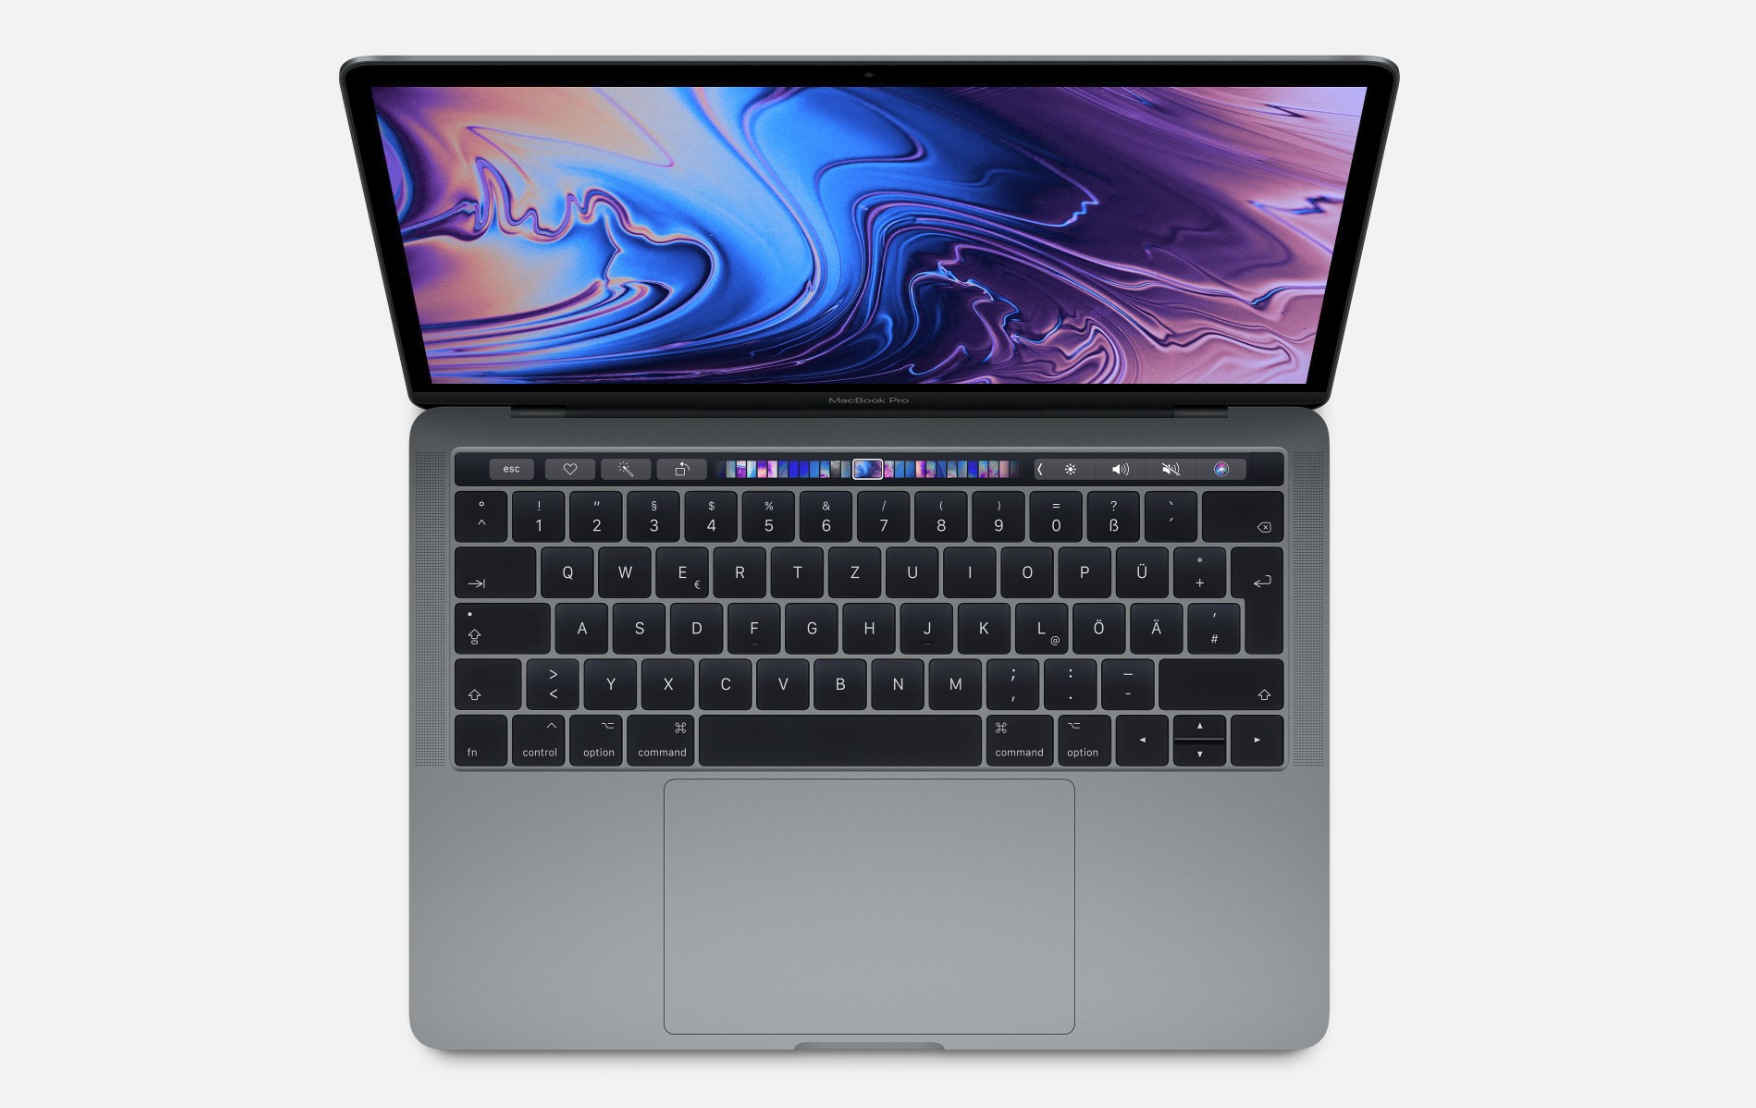 Apple MacBook Pro 13 2019 laptop review: Good performance, but no